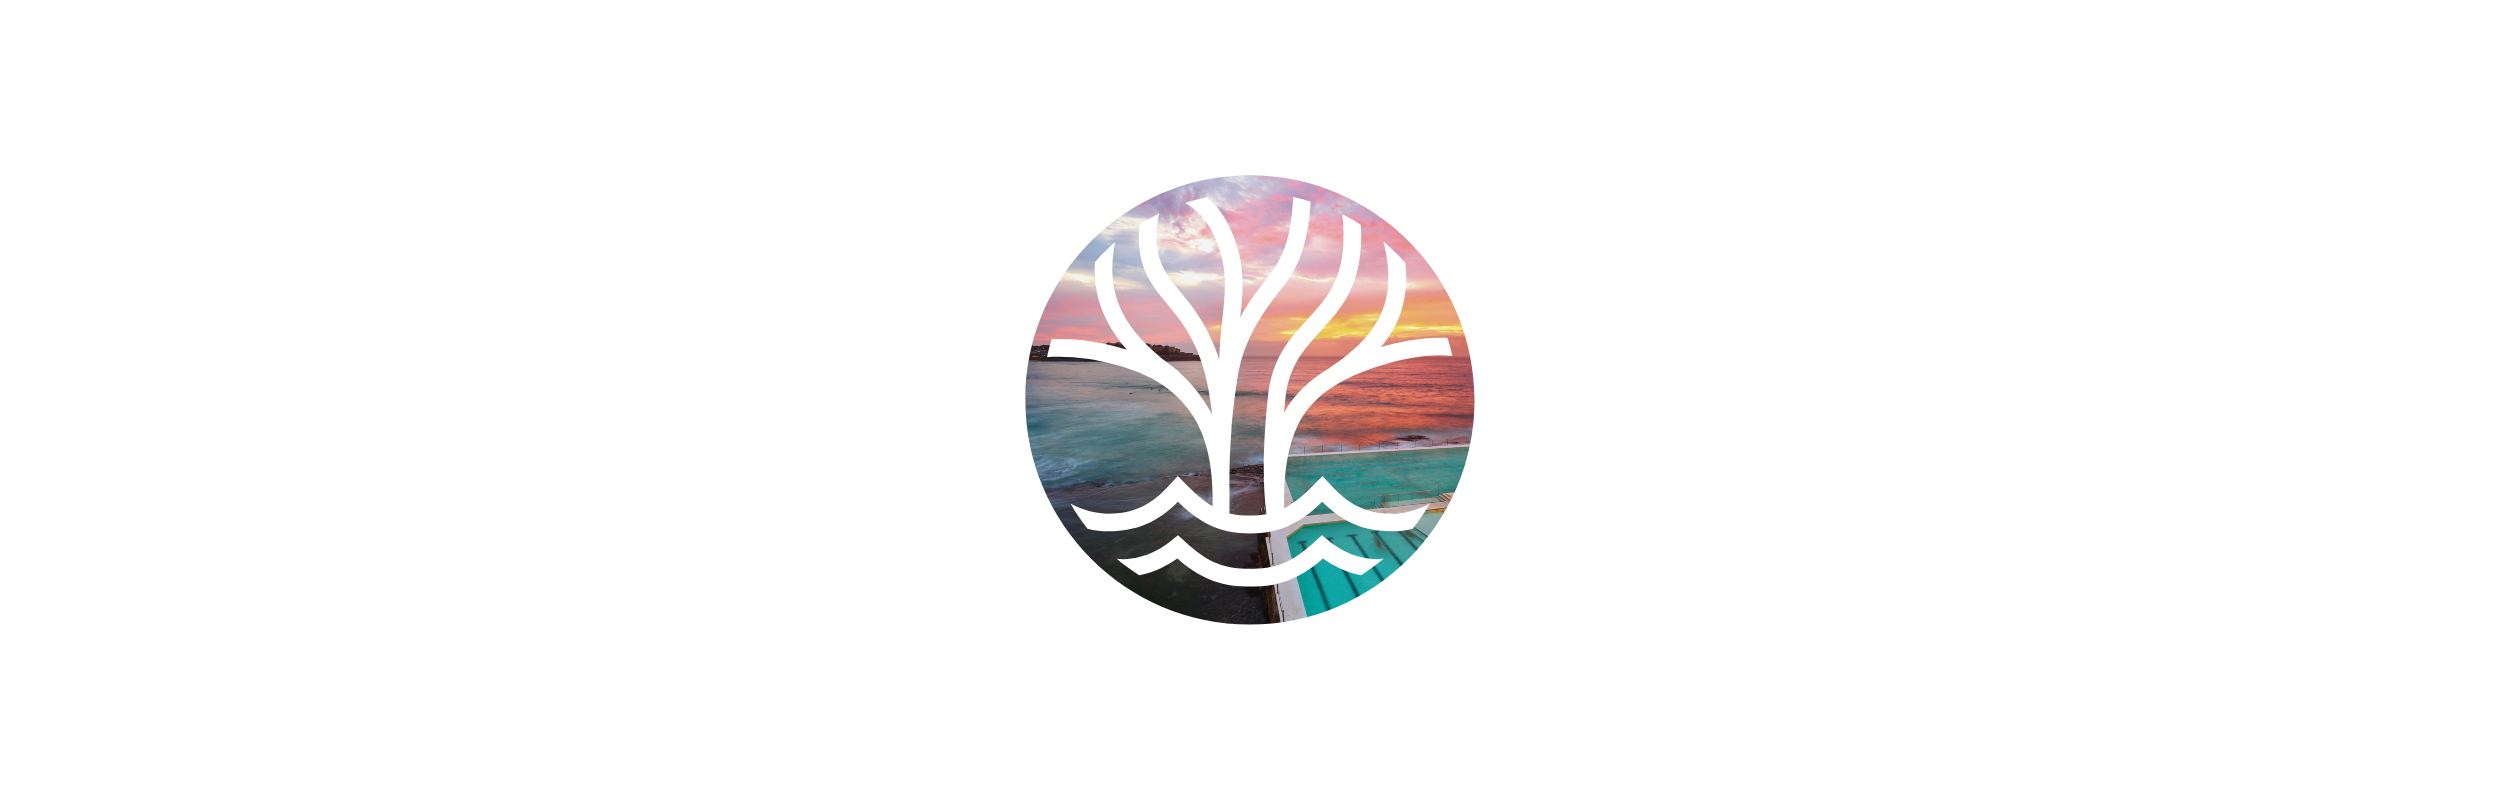 Wavetree icon with bondi beach background